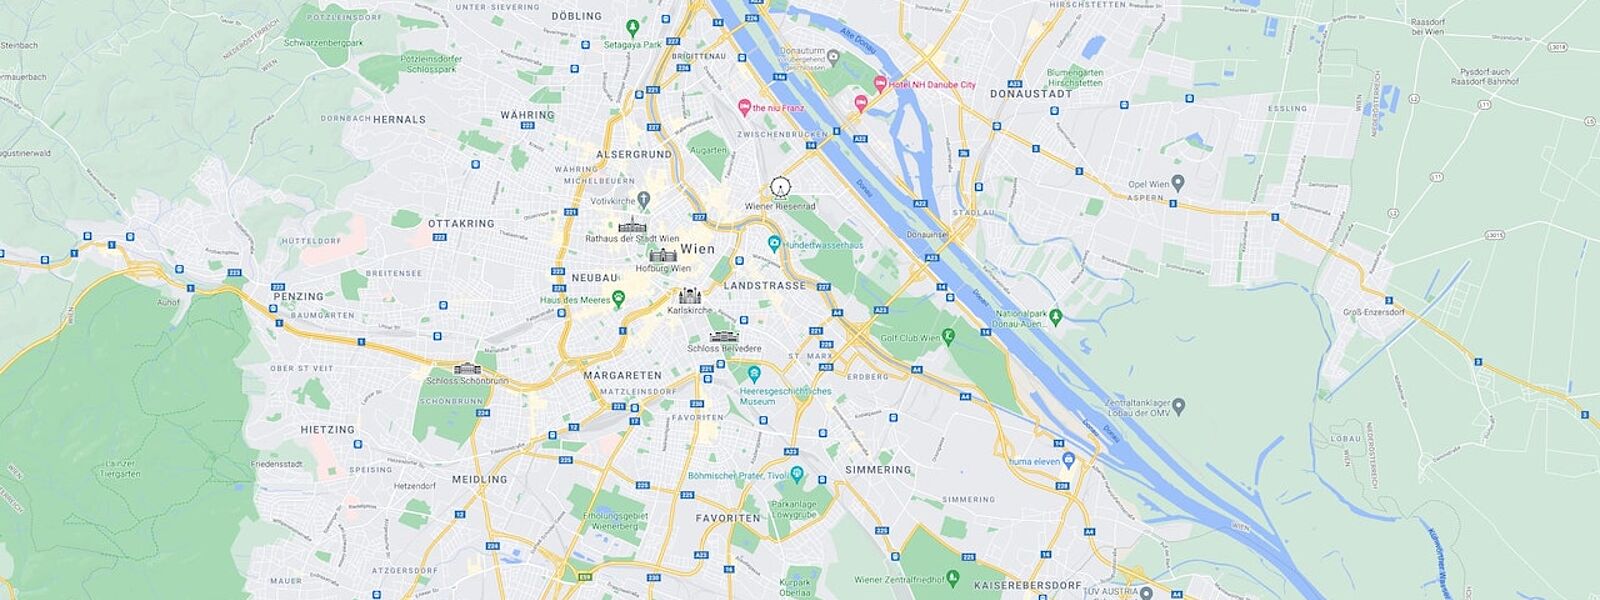 Placeholder Google Map Image